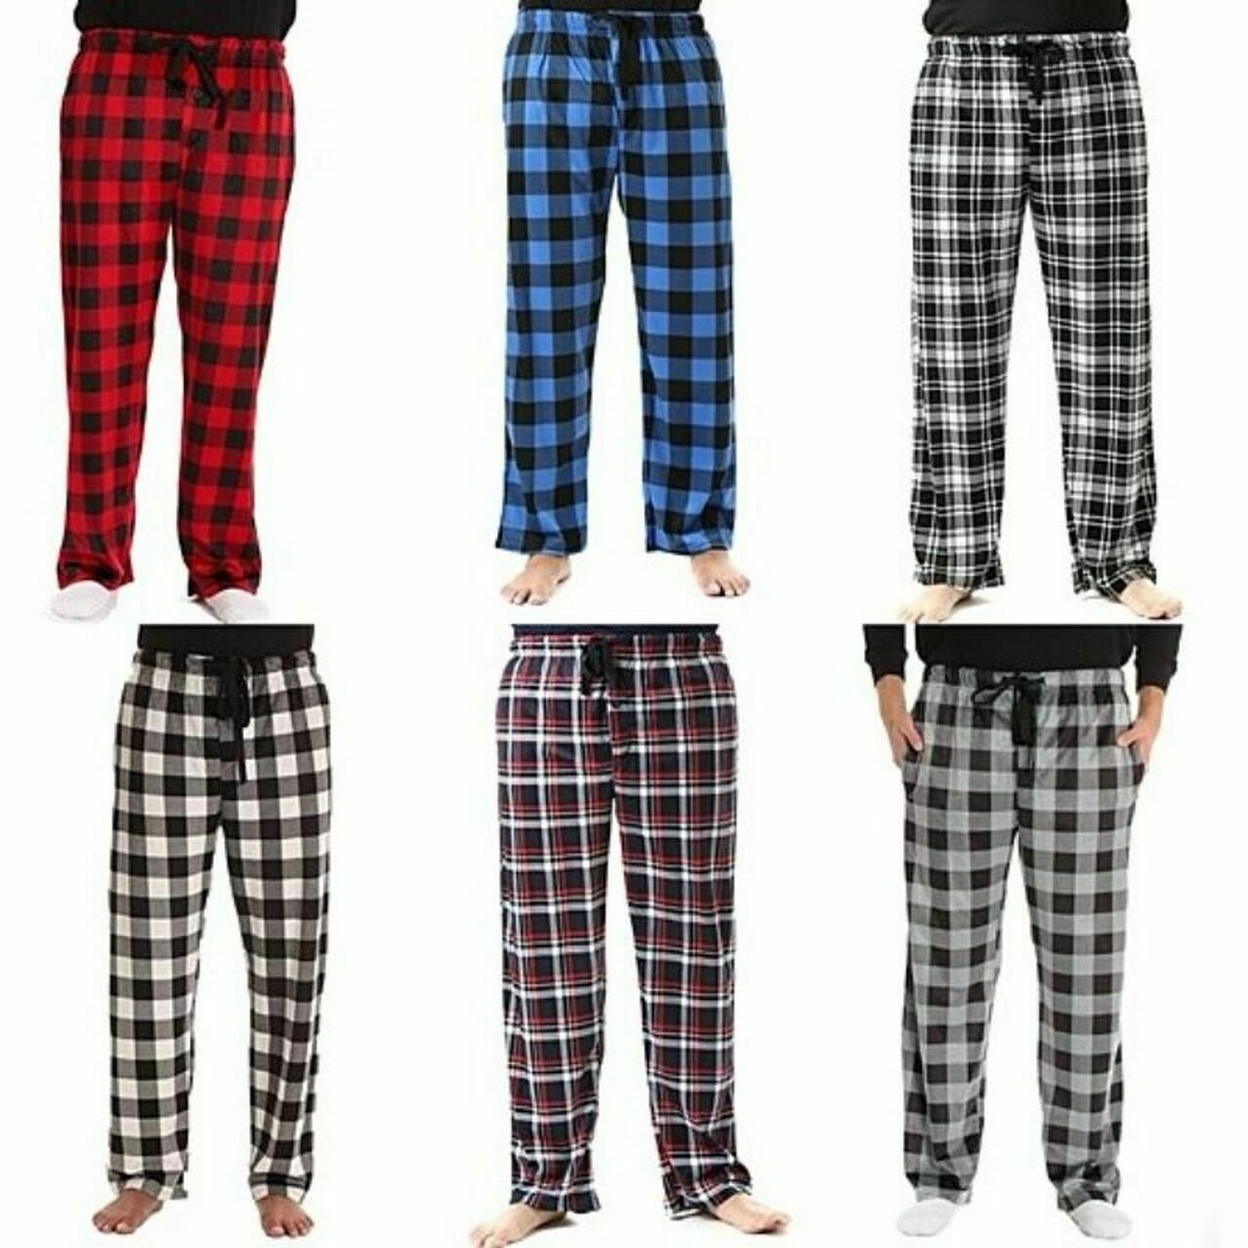 Men's Ultra-Soft Cozy Flannel Fleece Plaid Pajama Sleep Bottom Lounge Pants - Black, Small